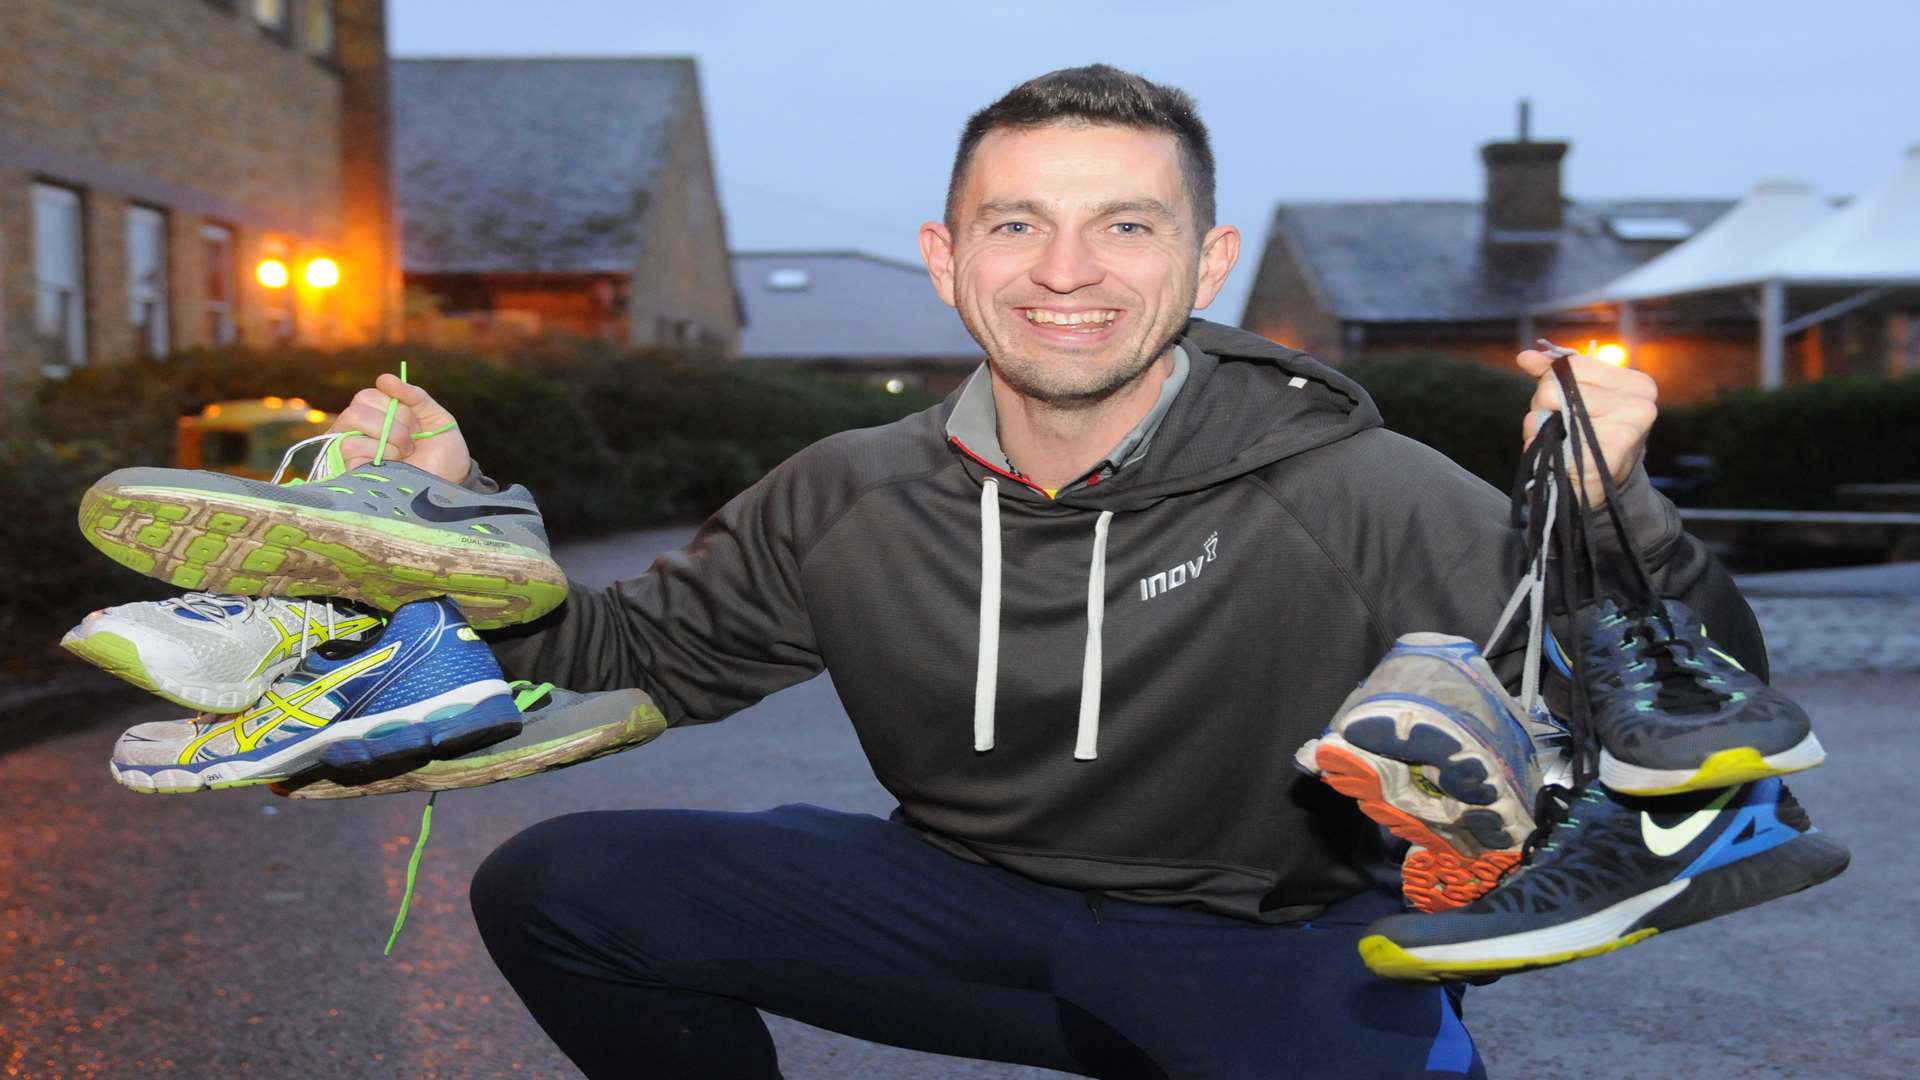 PE teacher Mike James ran 2,105 miles in 2015